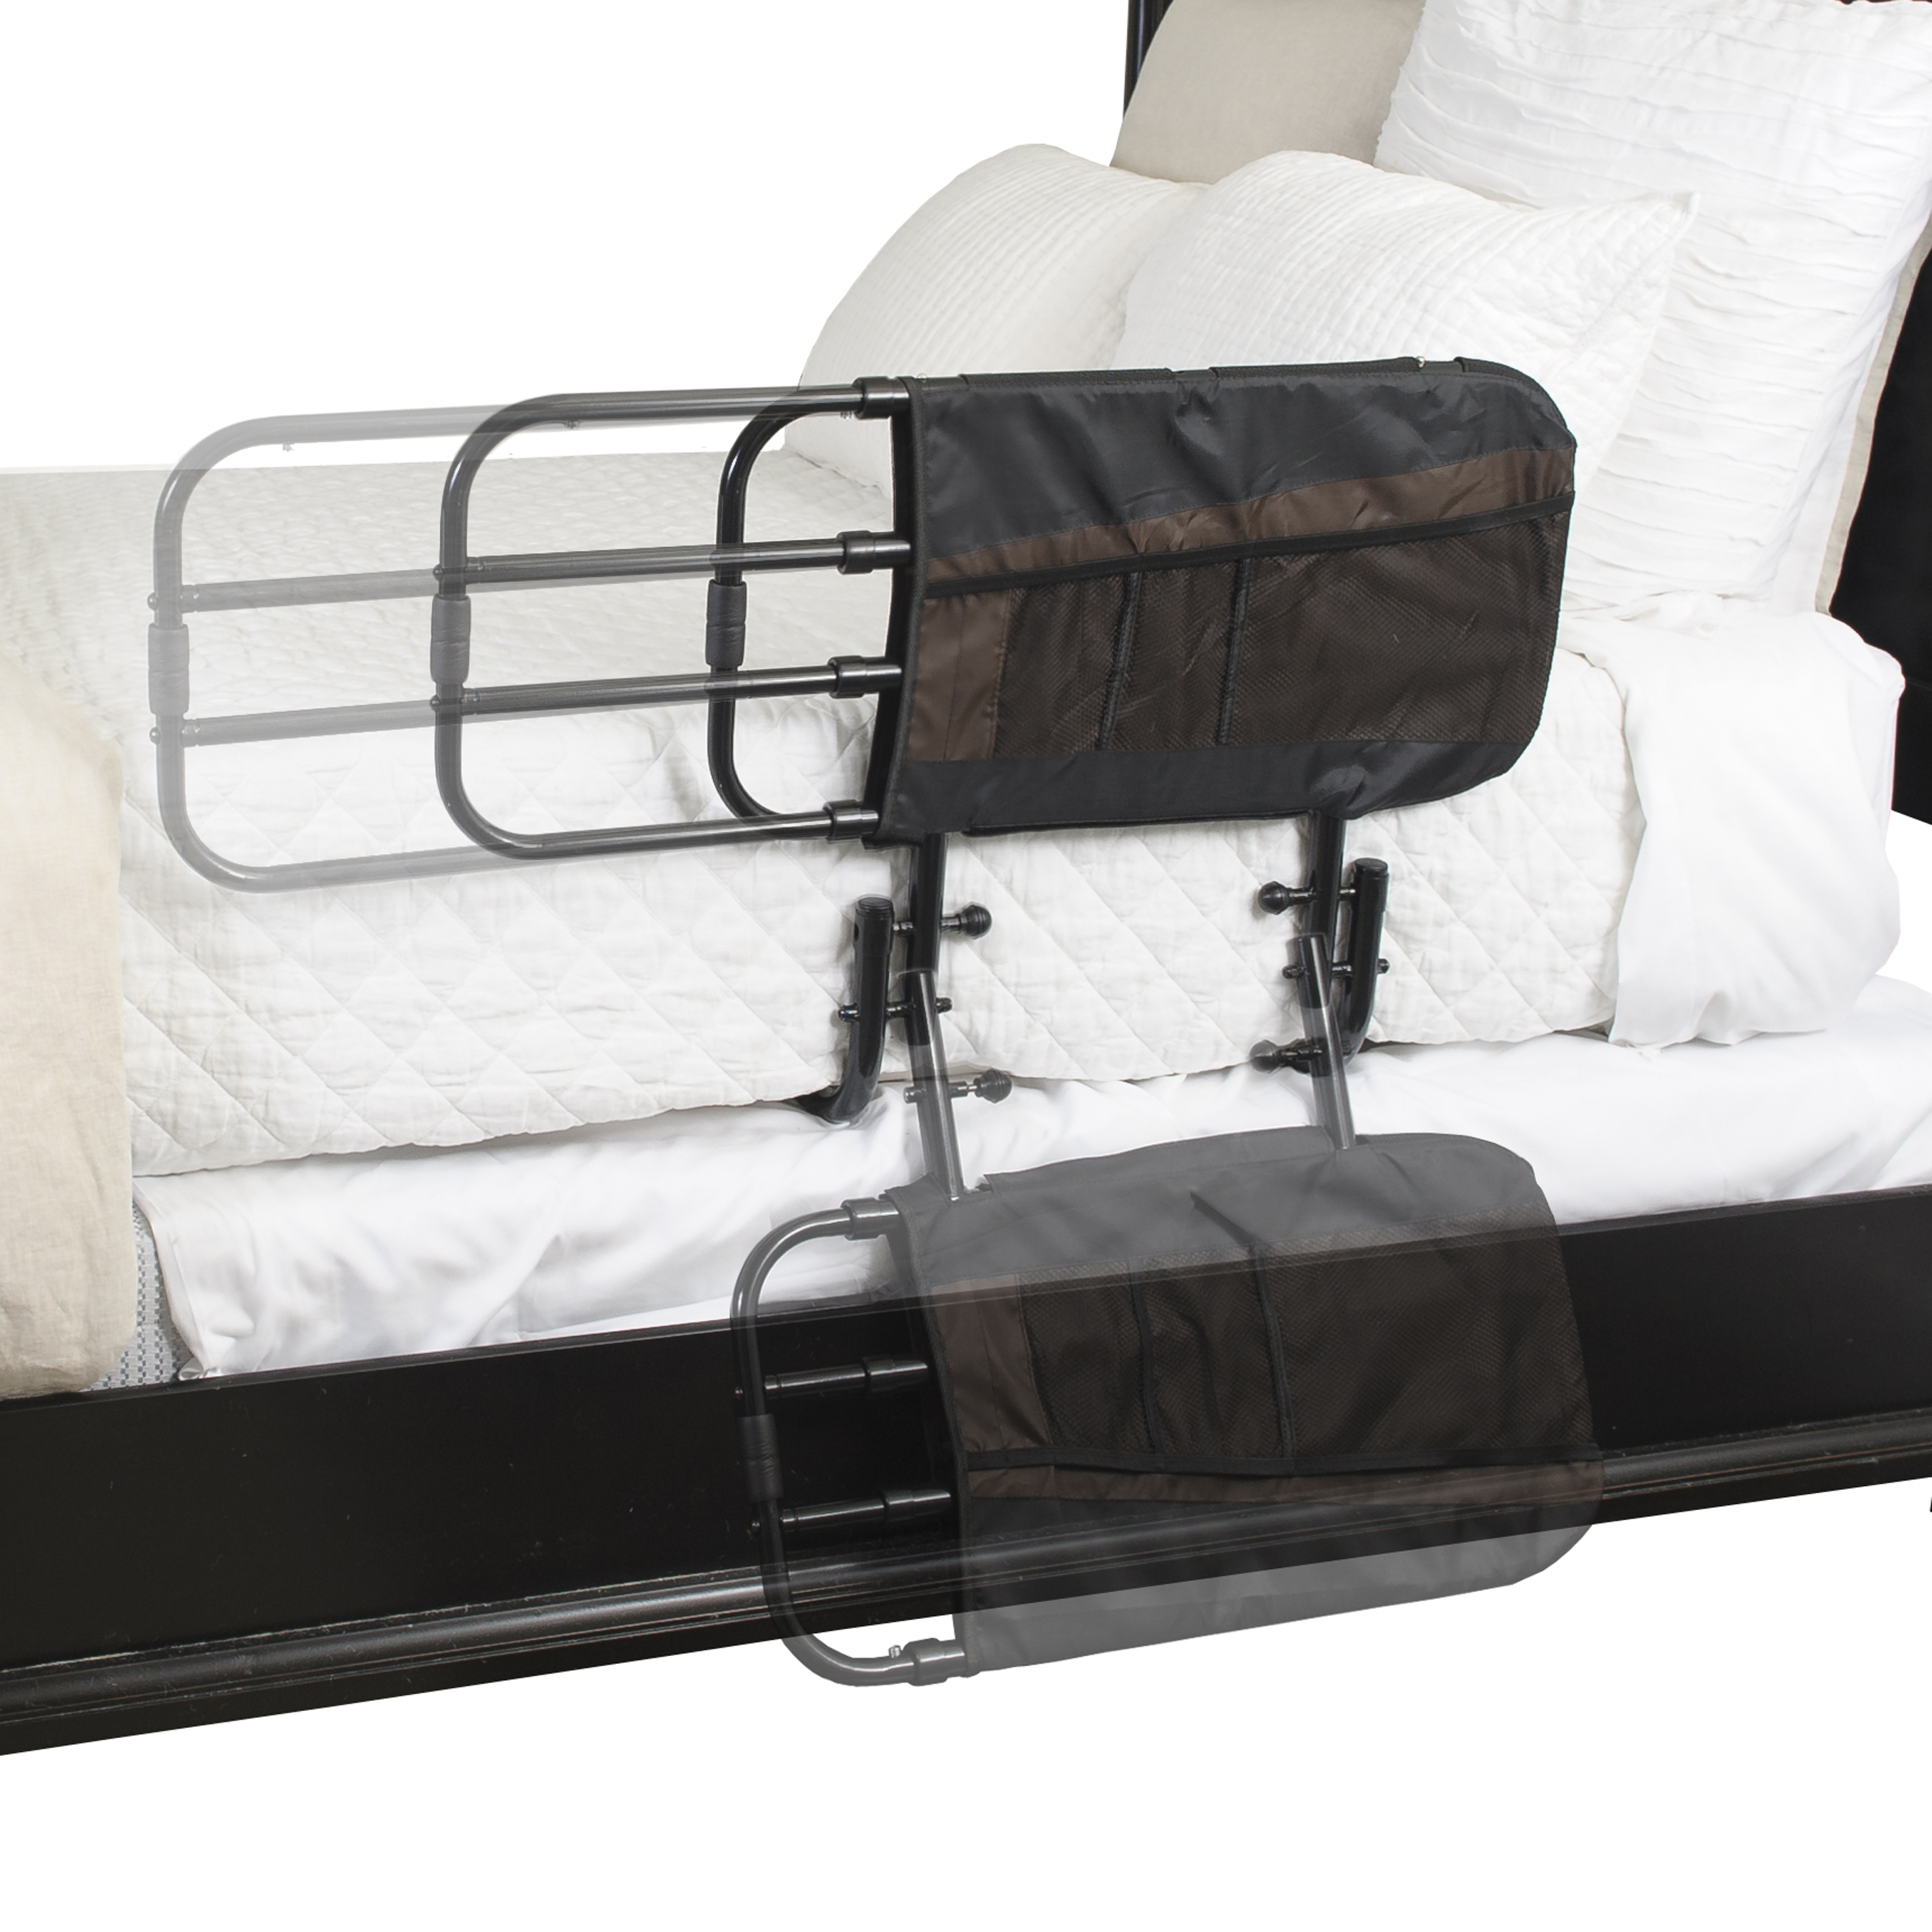 Product Image Stander Bed Rail EZ Adjust - showing fold down